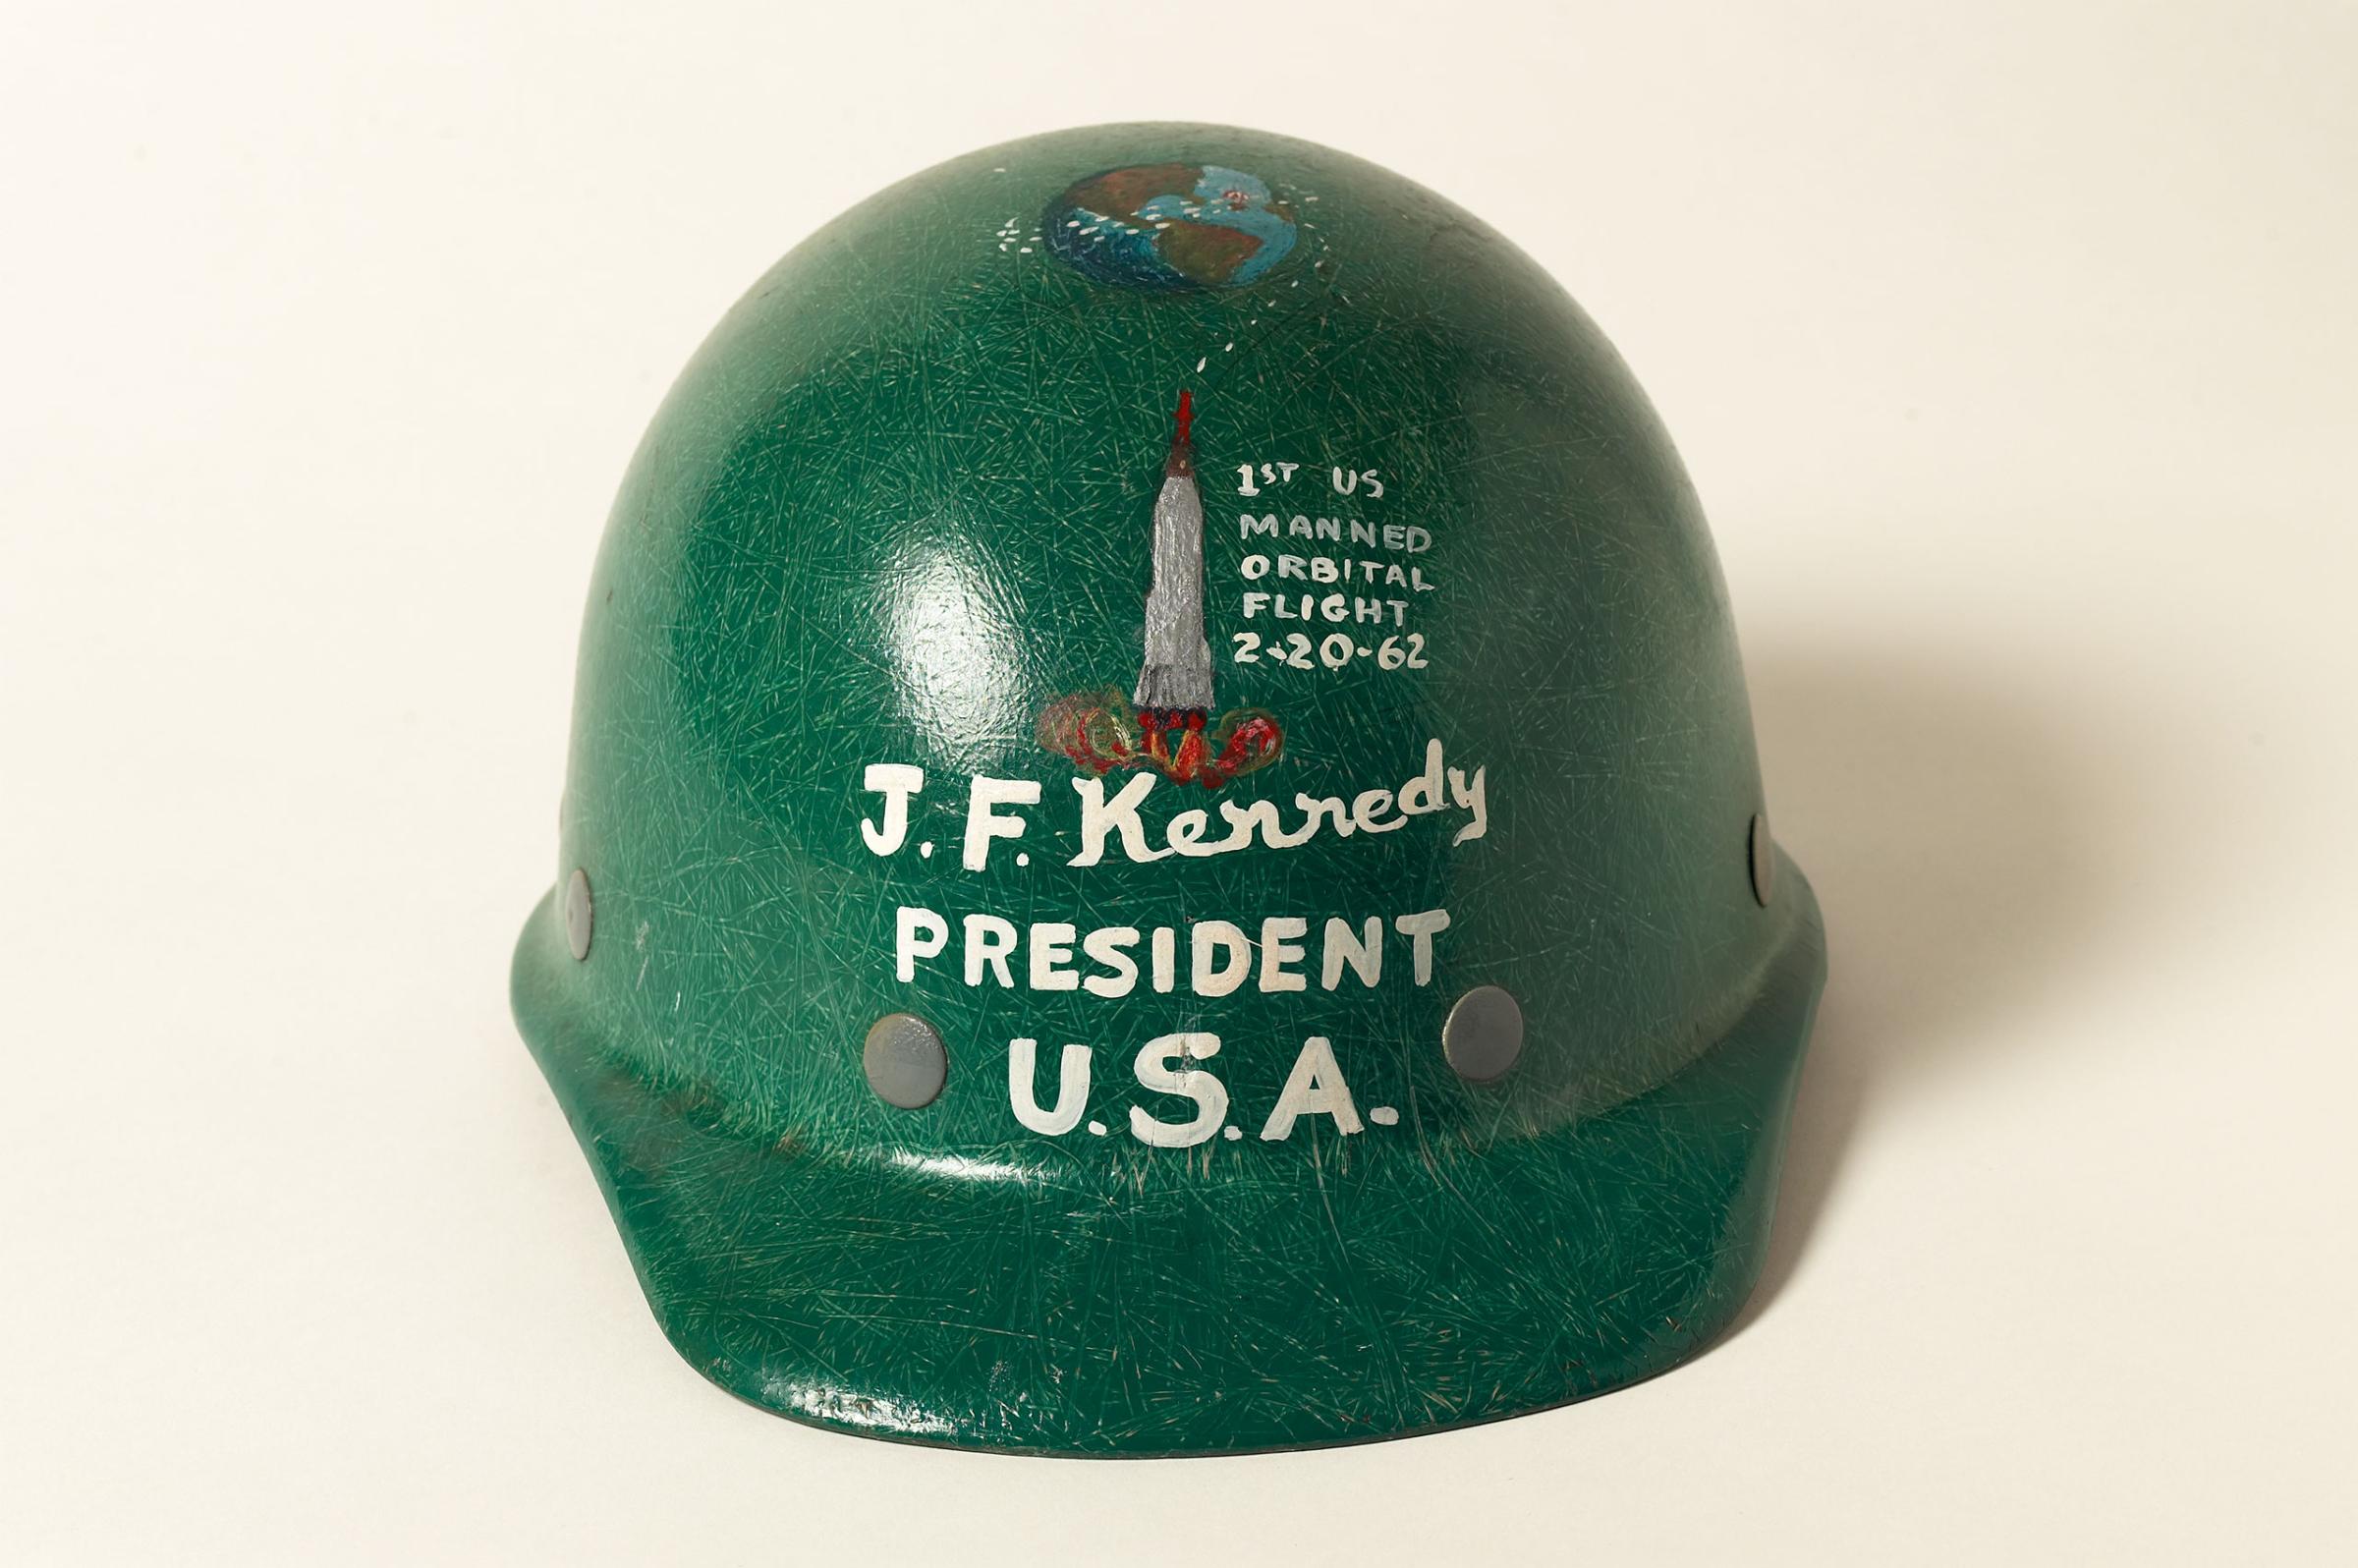 John F. Kennedy artifacts from centennial exhibition.